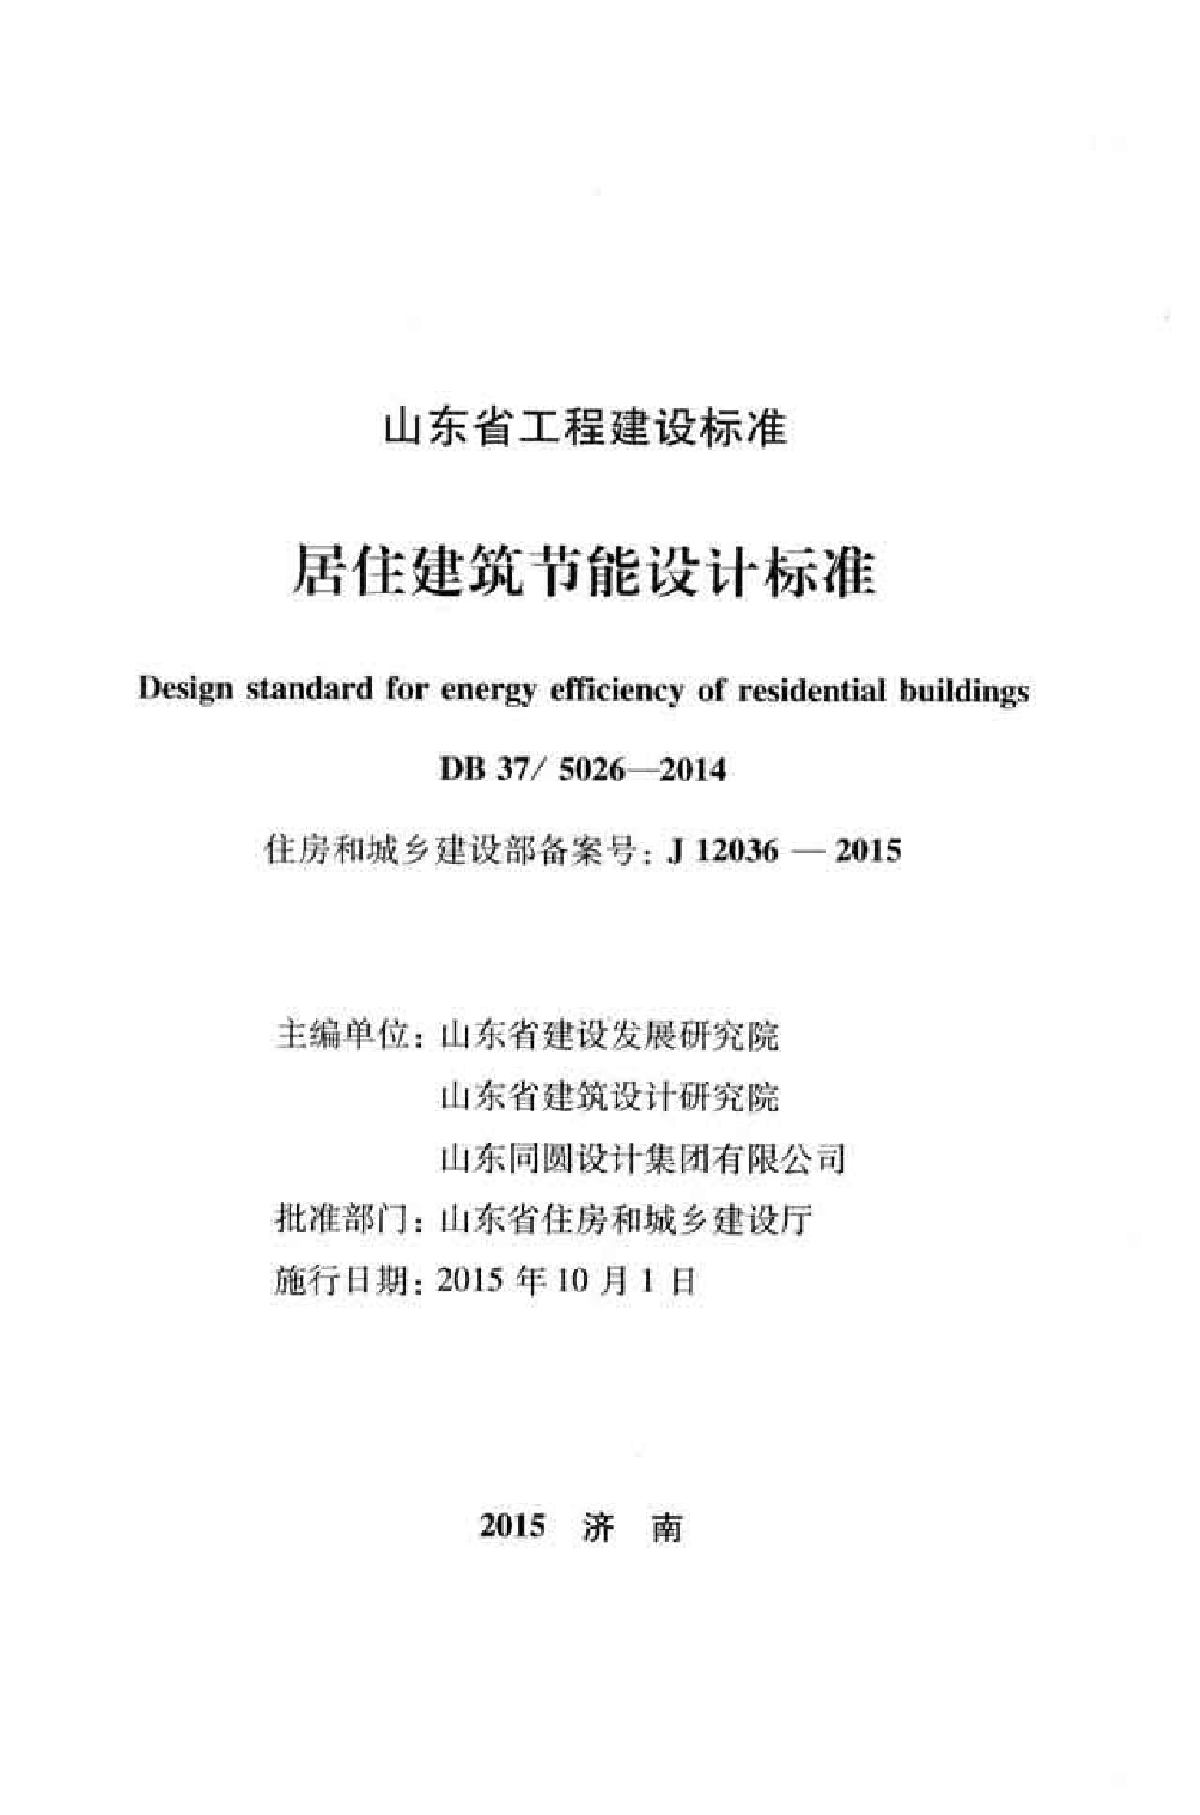 DB375026-2014山东省居住建筑节能设计标准-图二